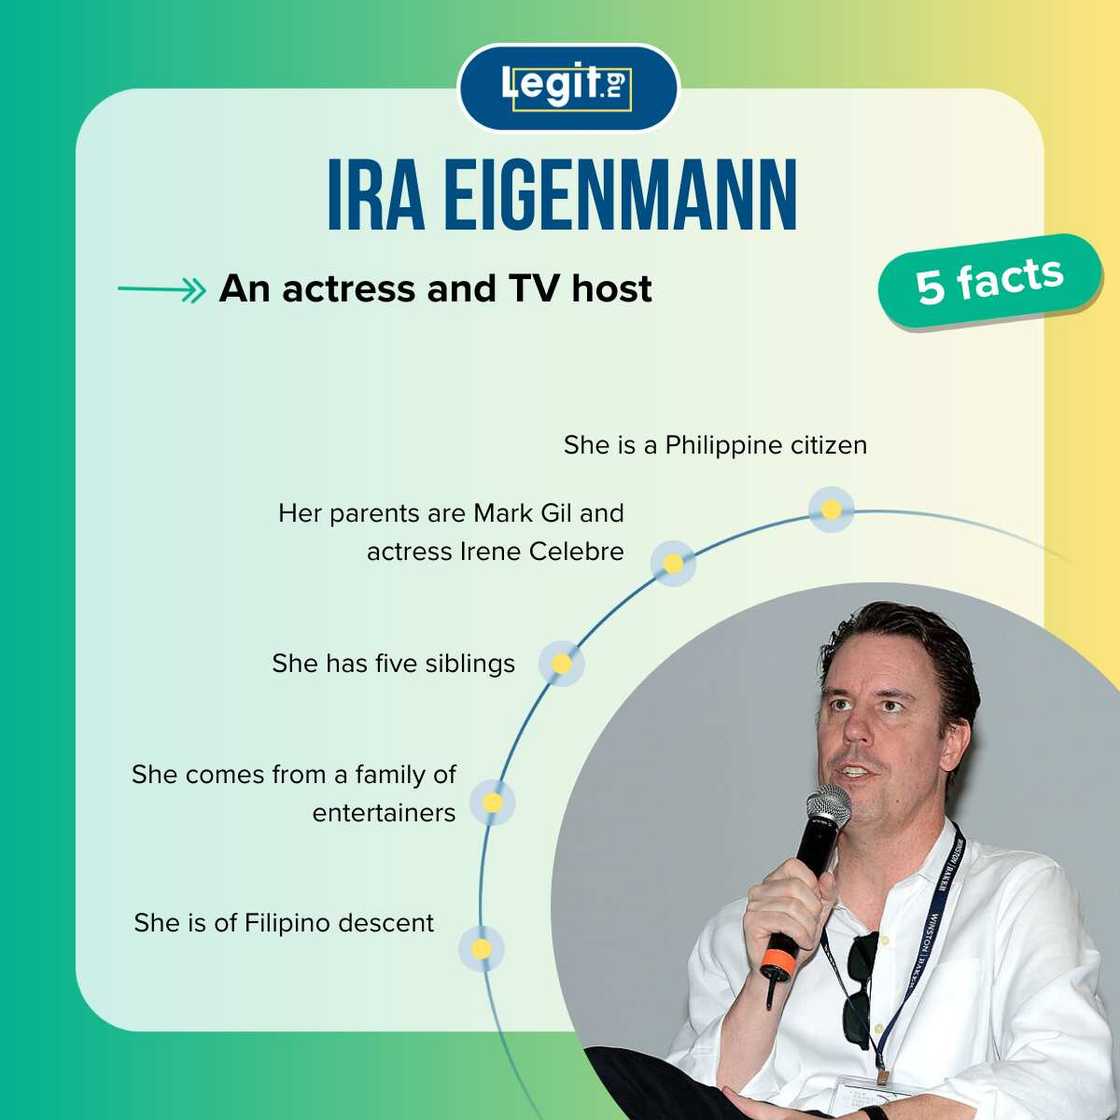 Facts about Ira Eigenmann